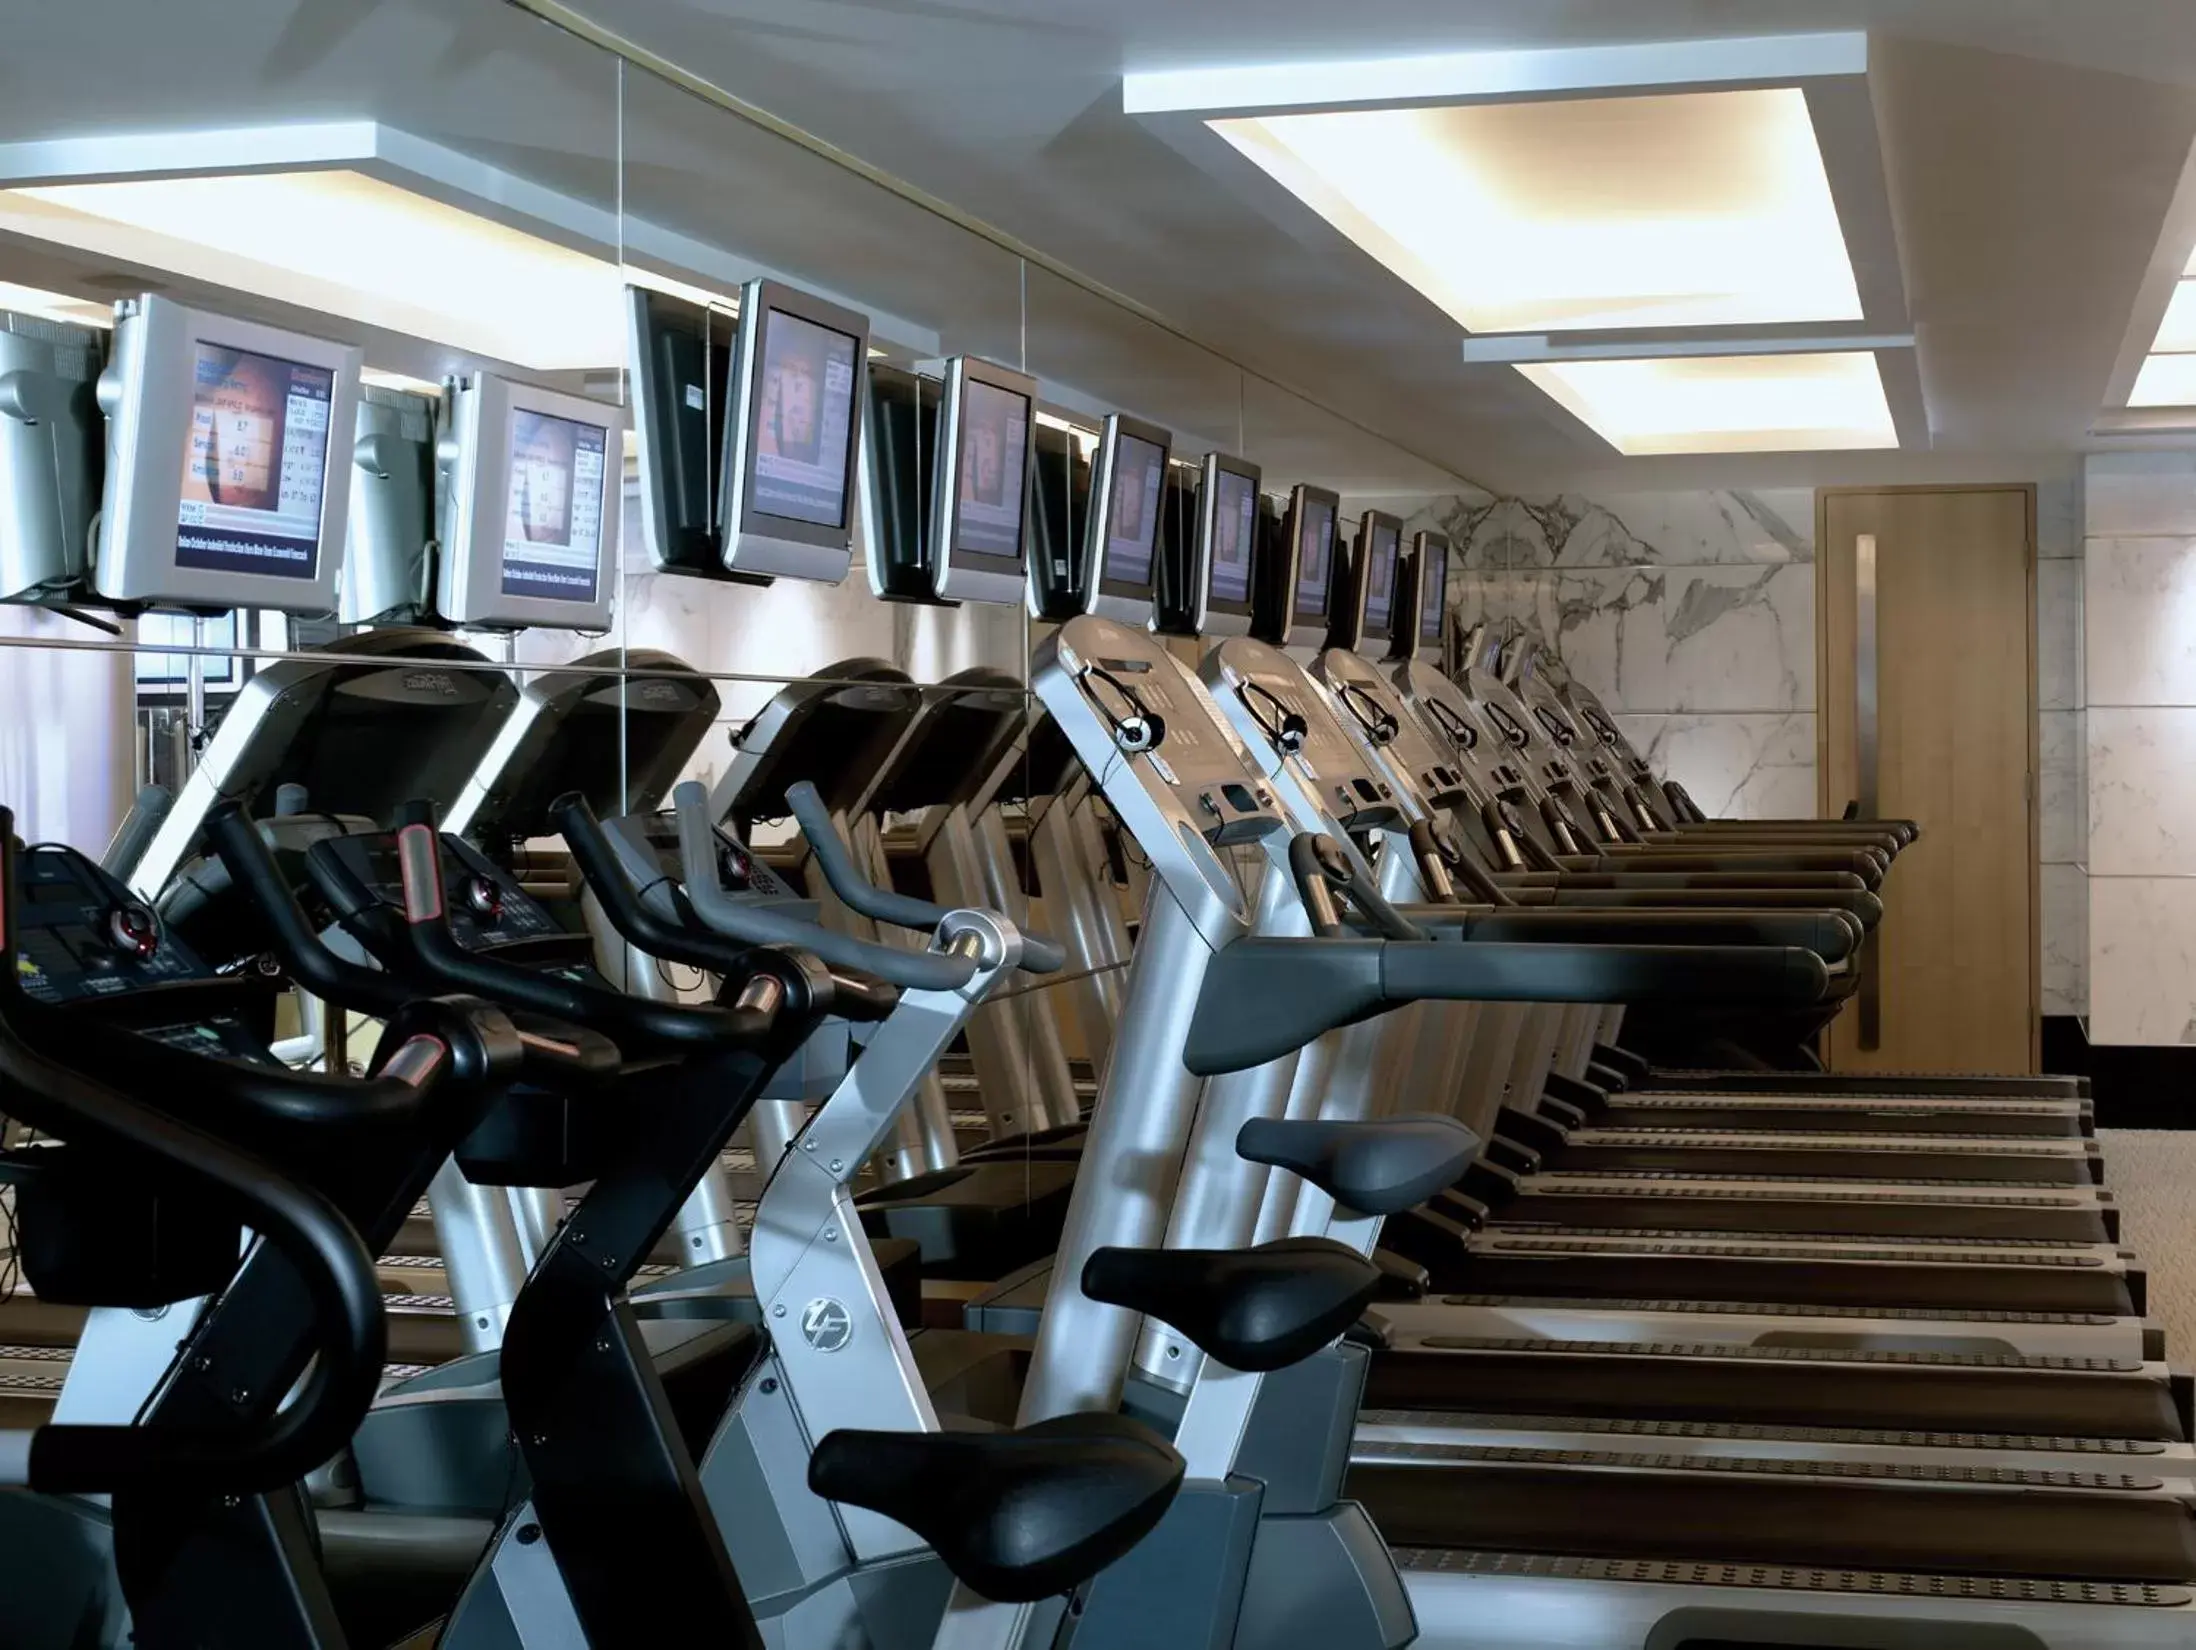 Fitness centre/facilities, Fitness Center/Facilities in Kowloon Shangri-La, Hong Kong